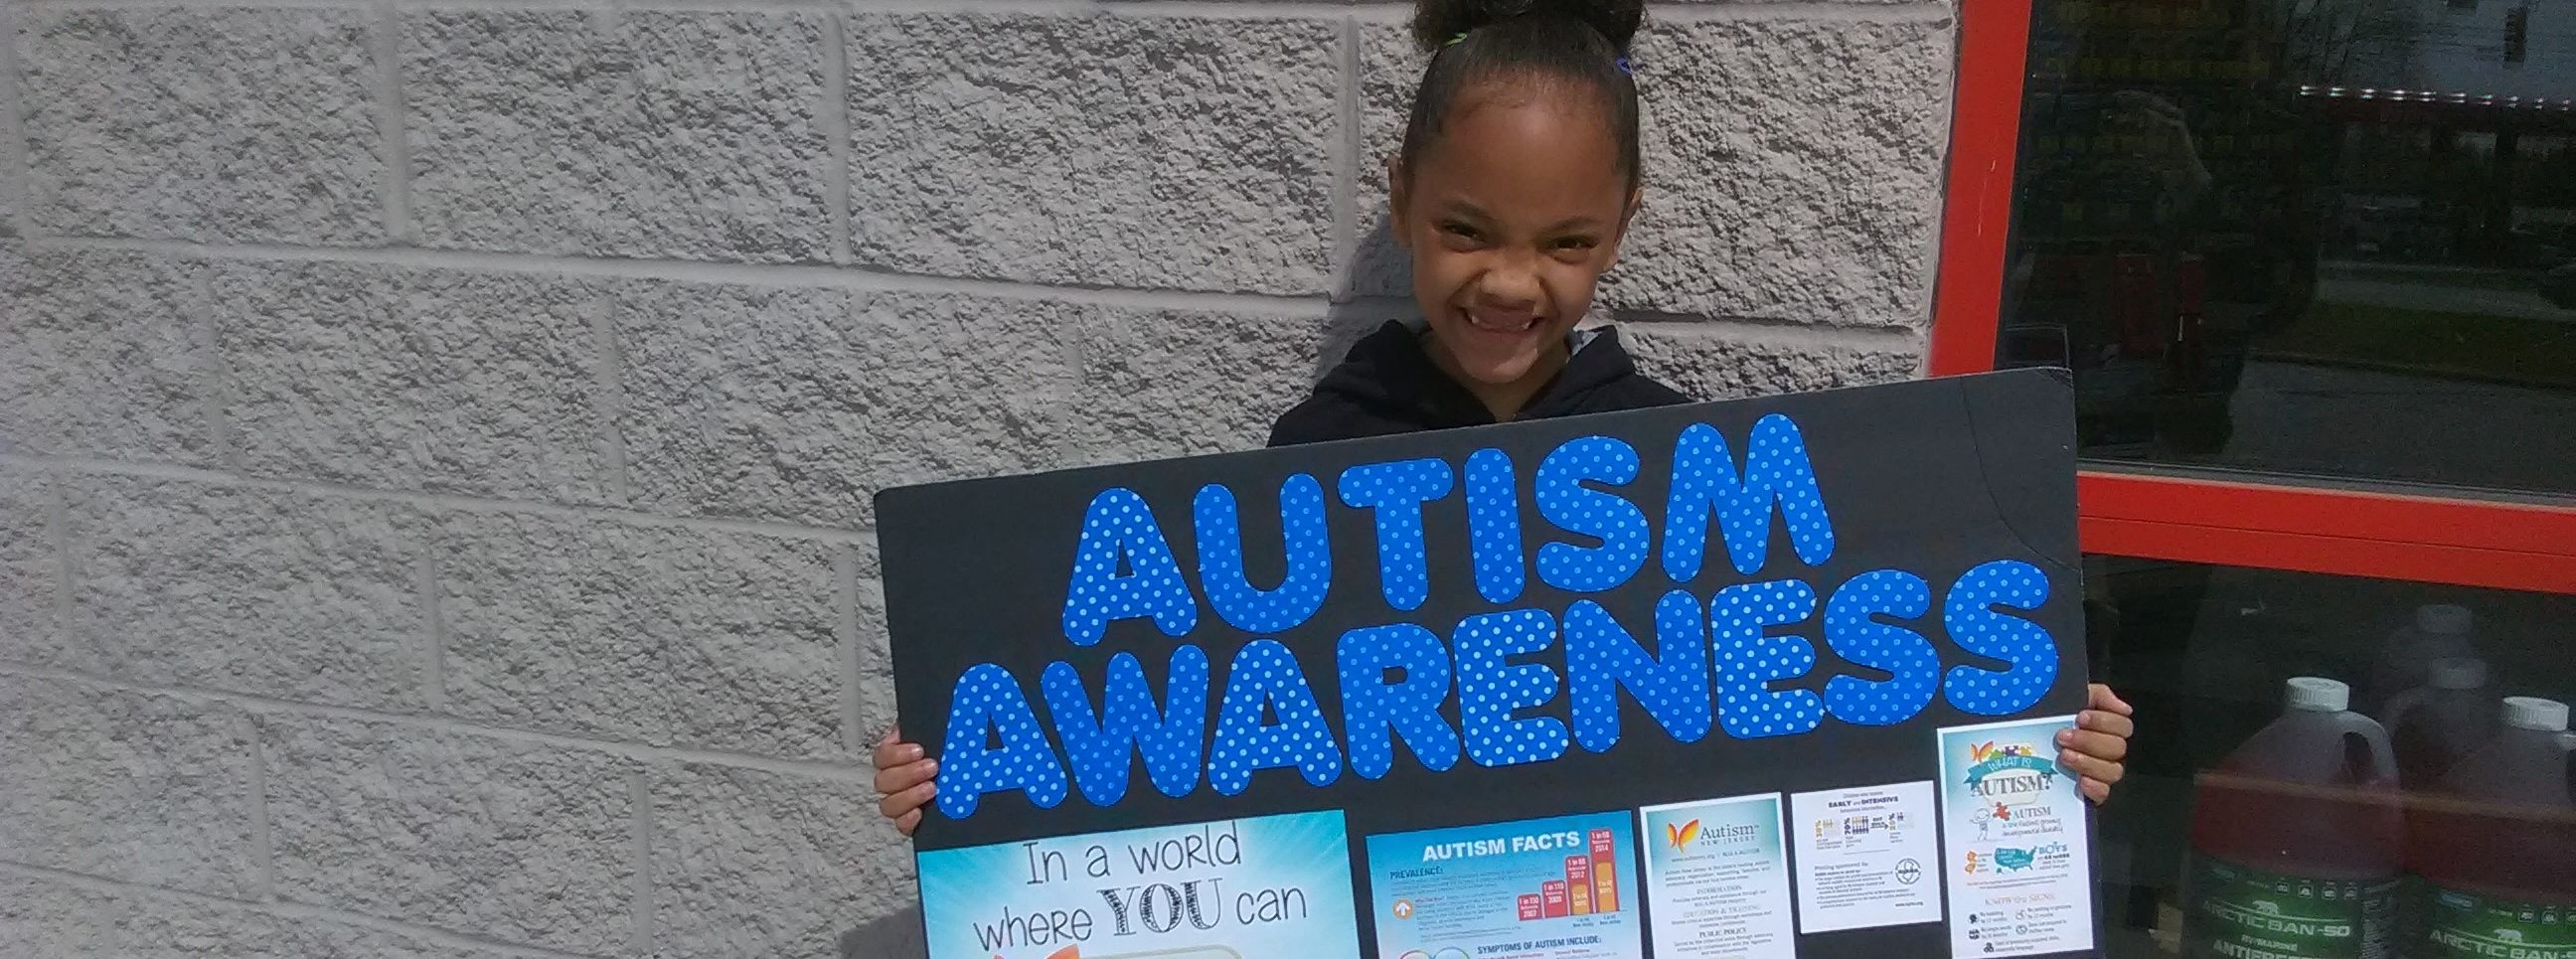 Neveah, Age 6, Autism Awareness Poster